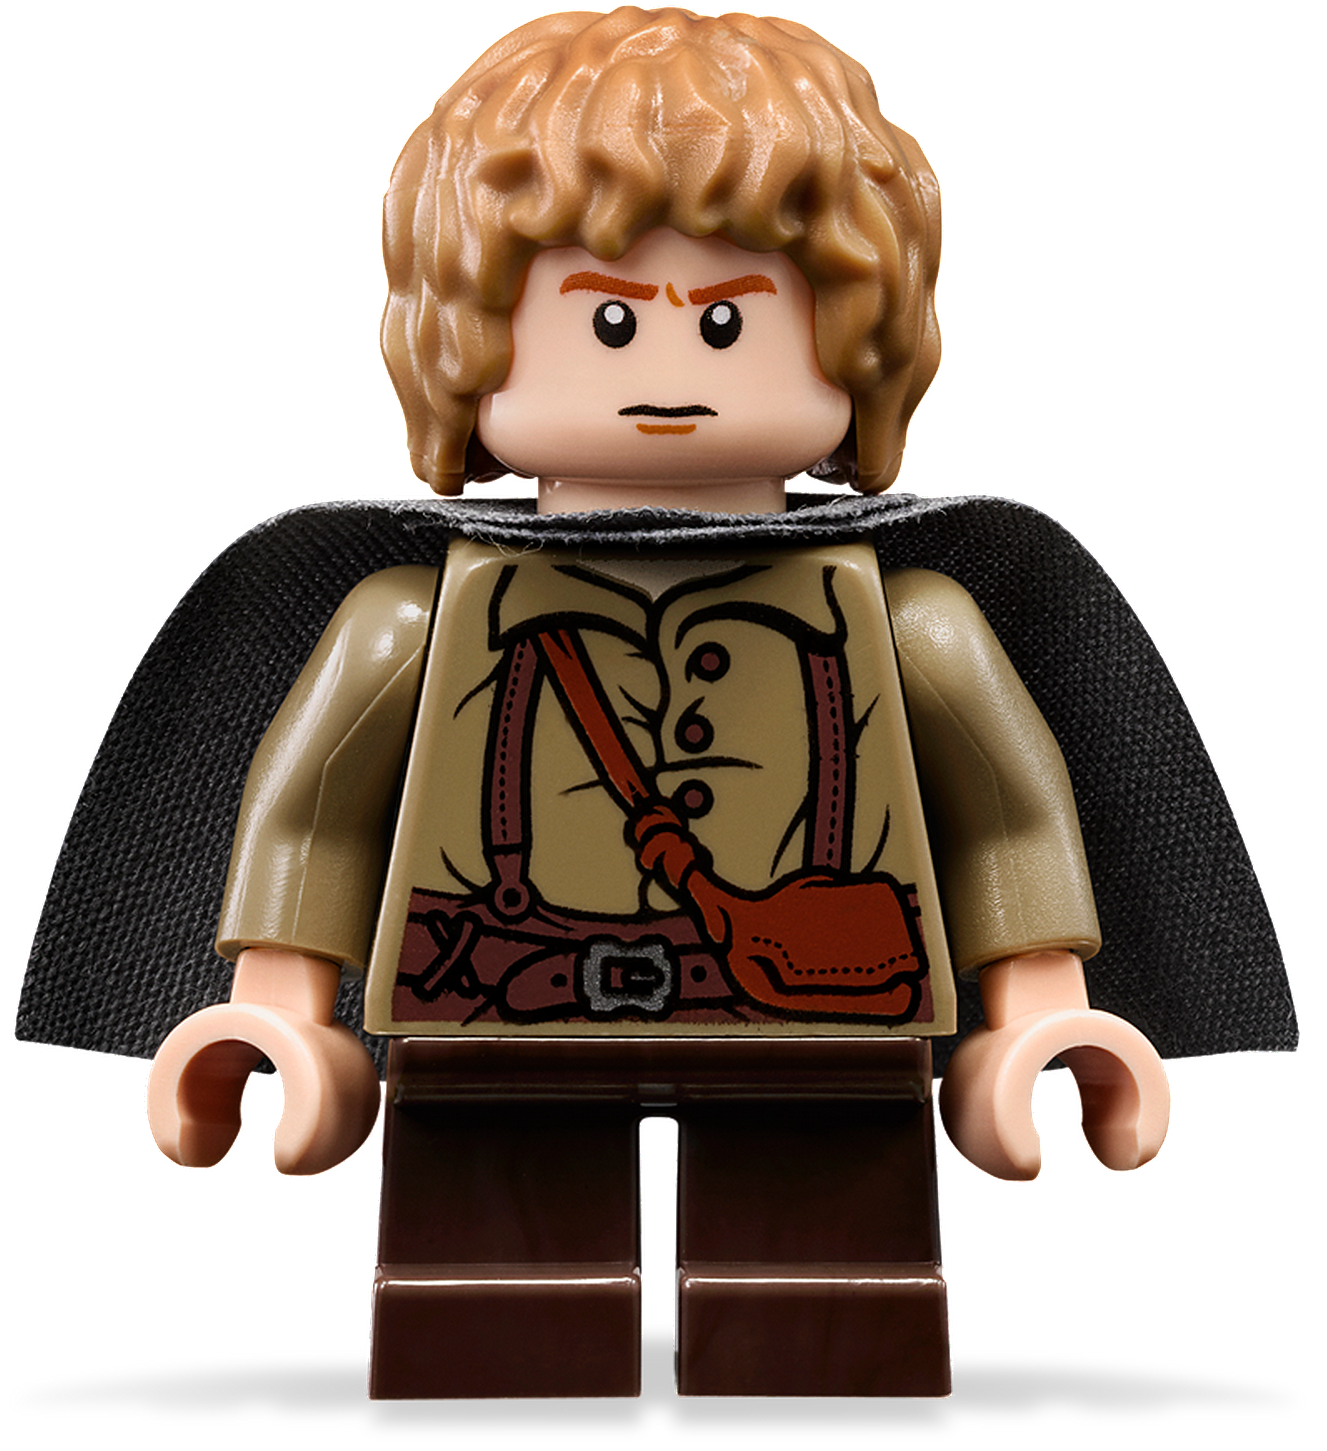 Fan:Star Lord - Brickipedia, the LEGO Wiki